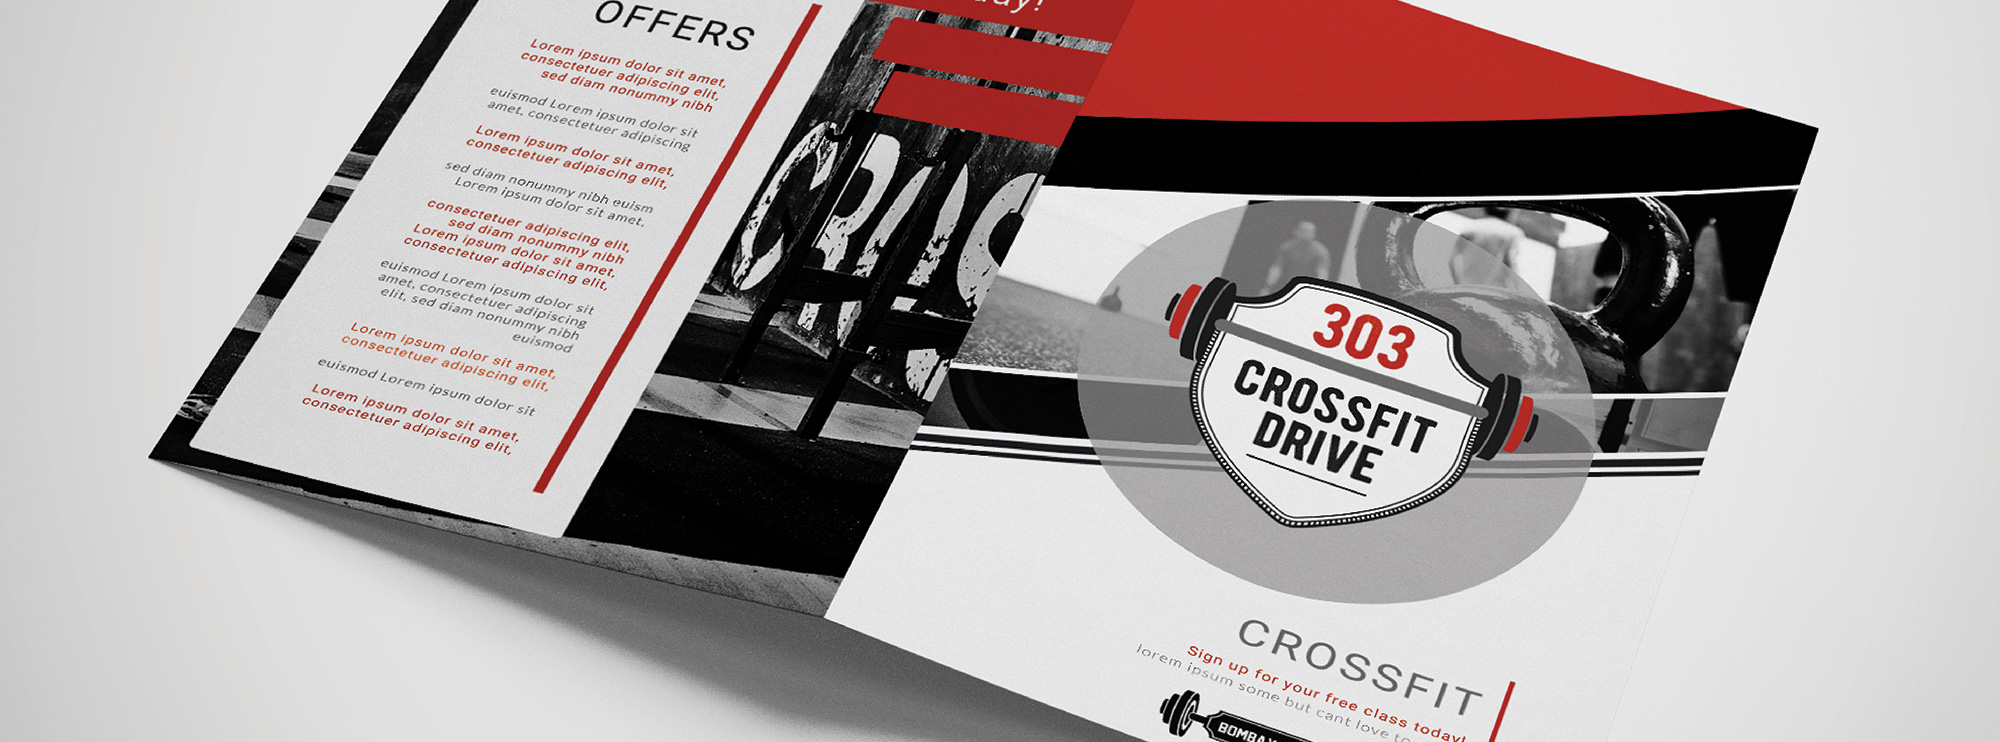 303 Crossfit Drive Brand Design